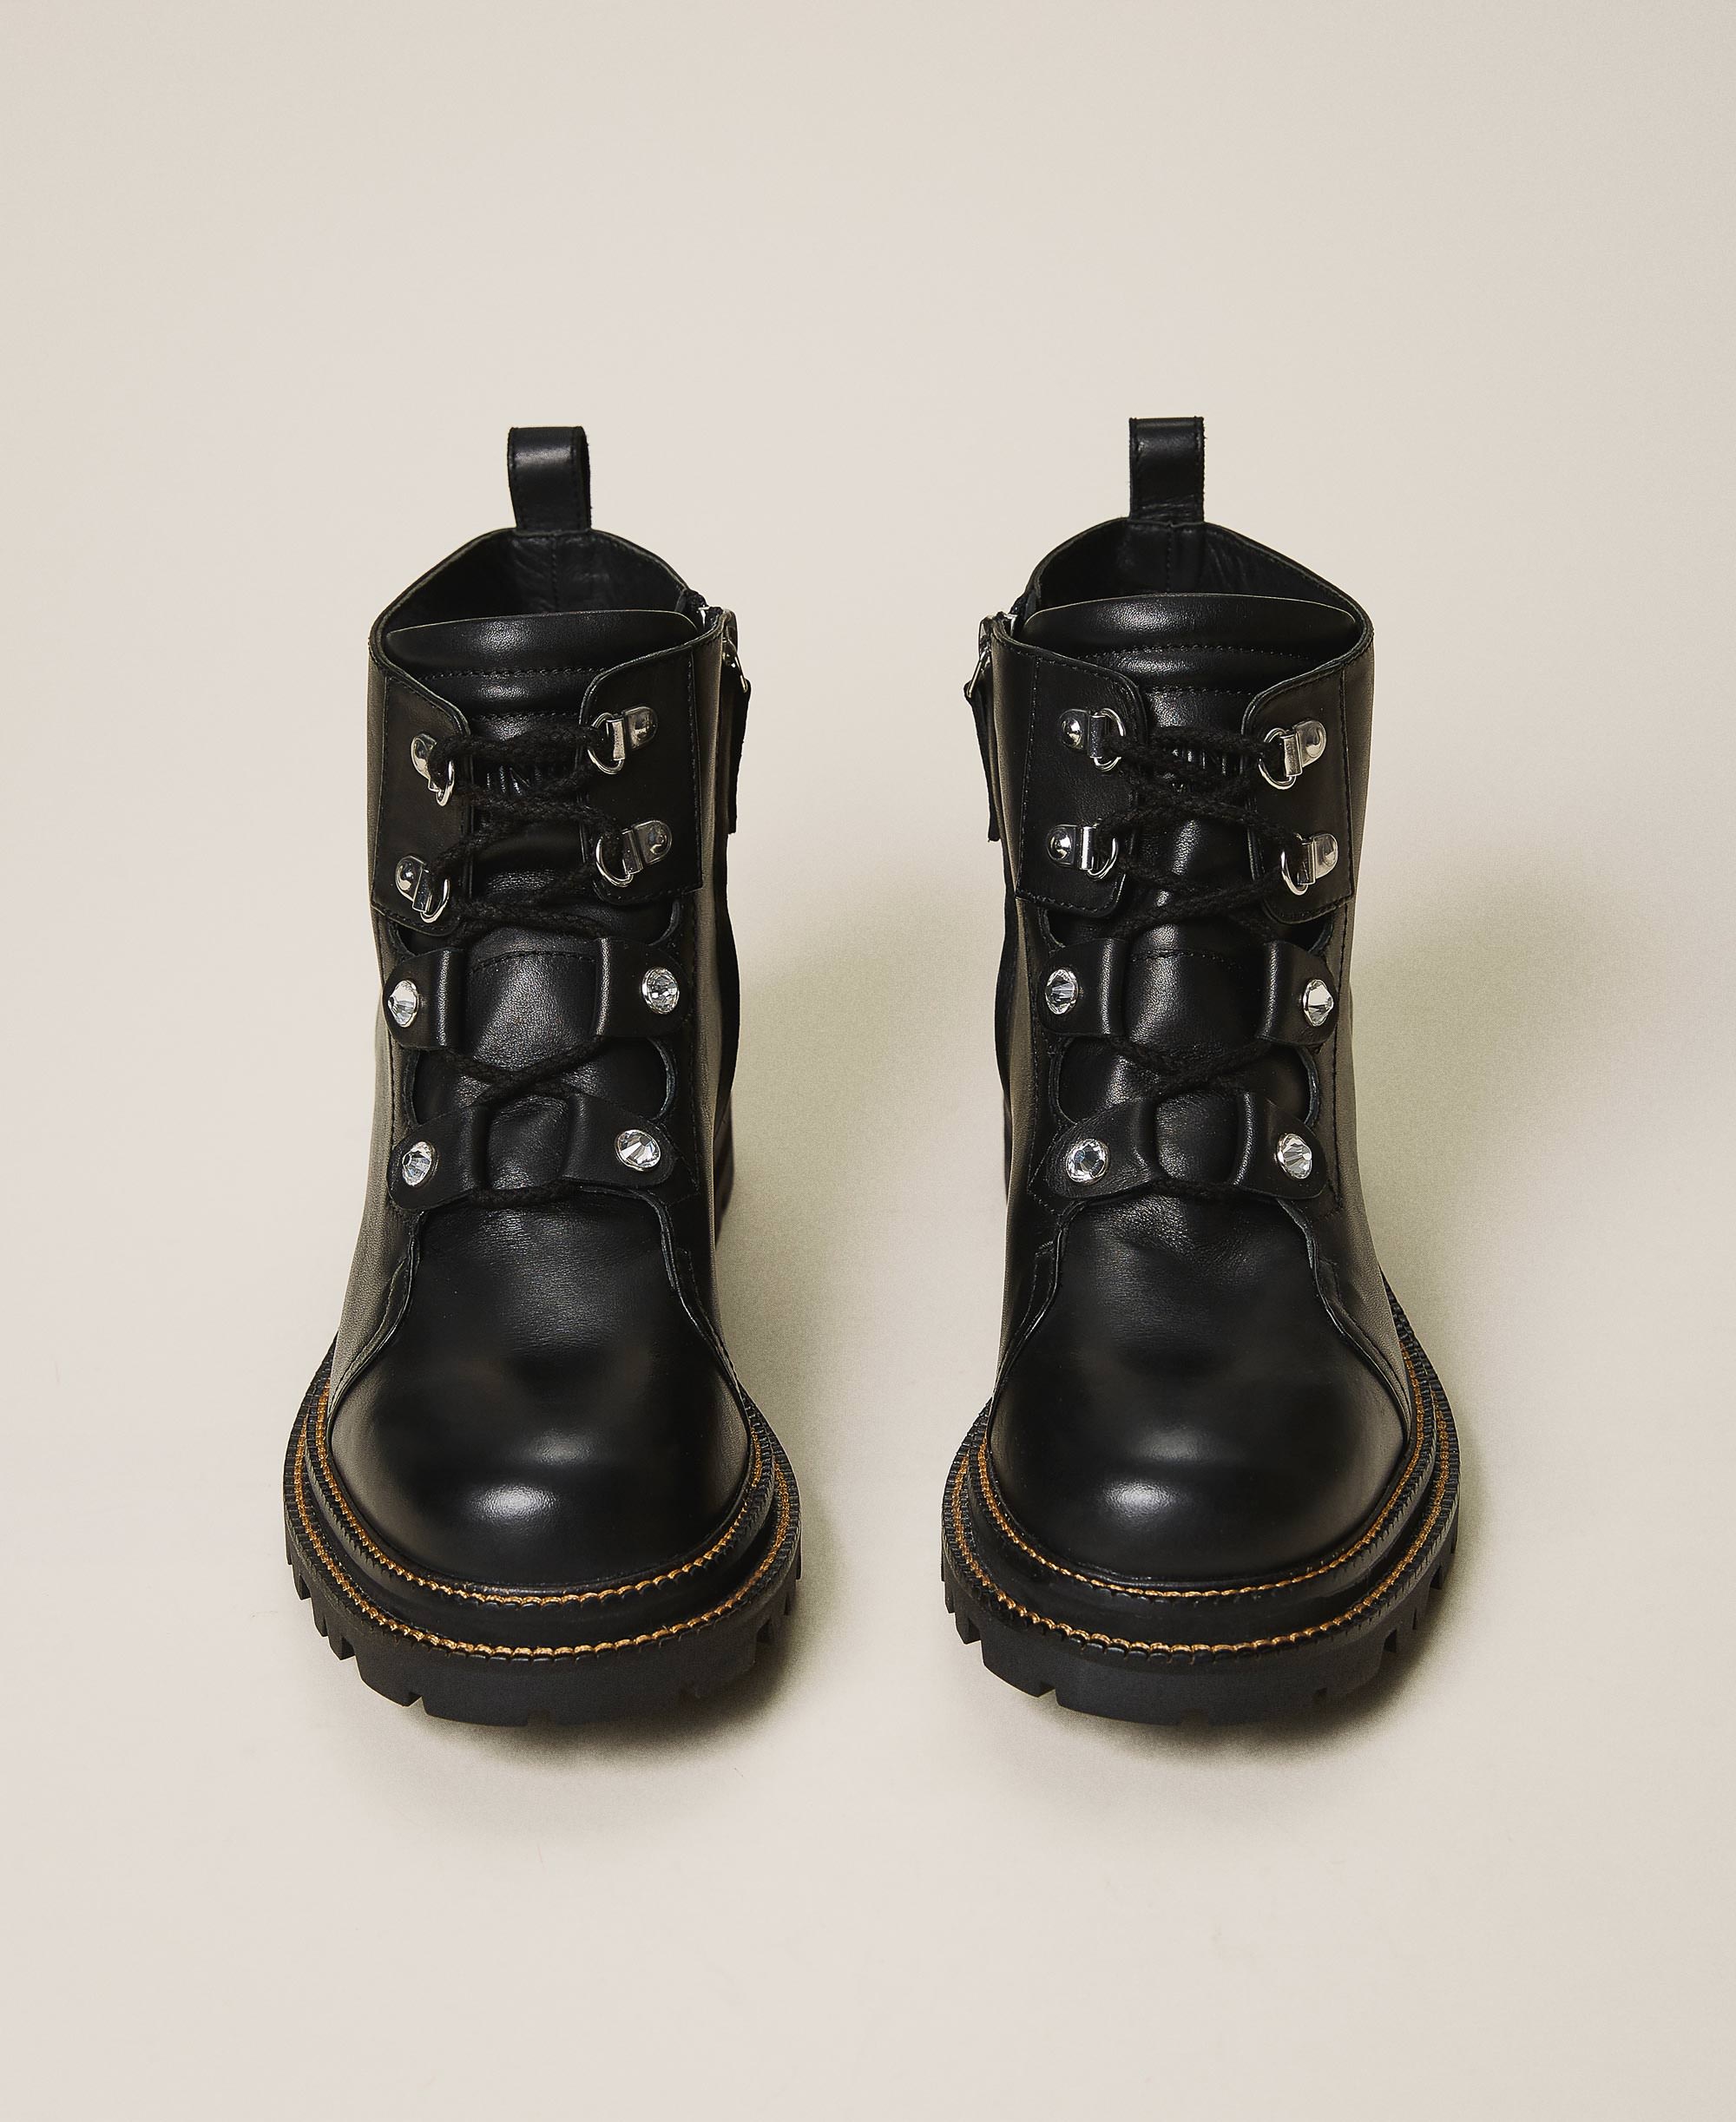 embellished combat boots